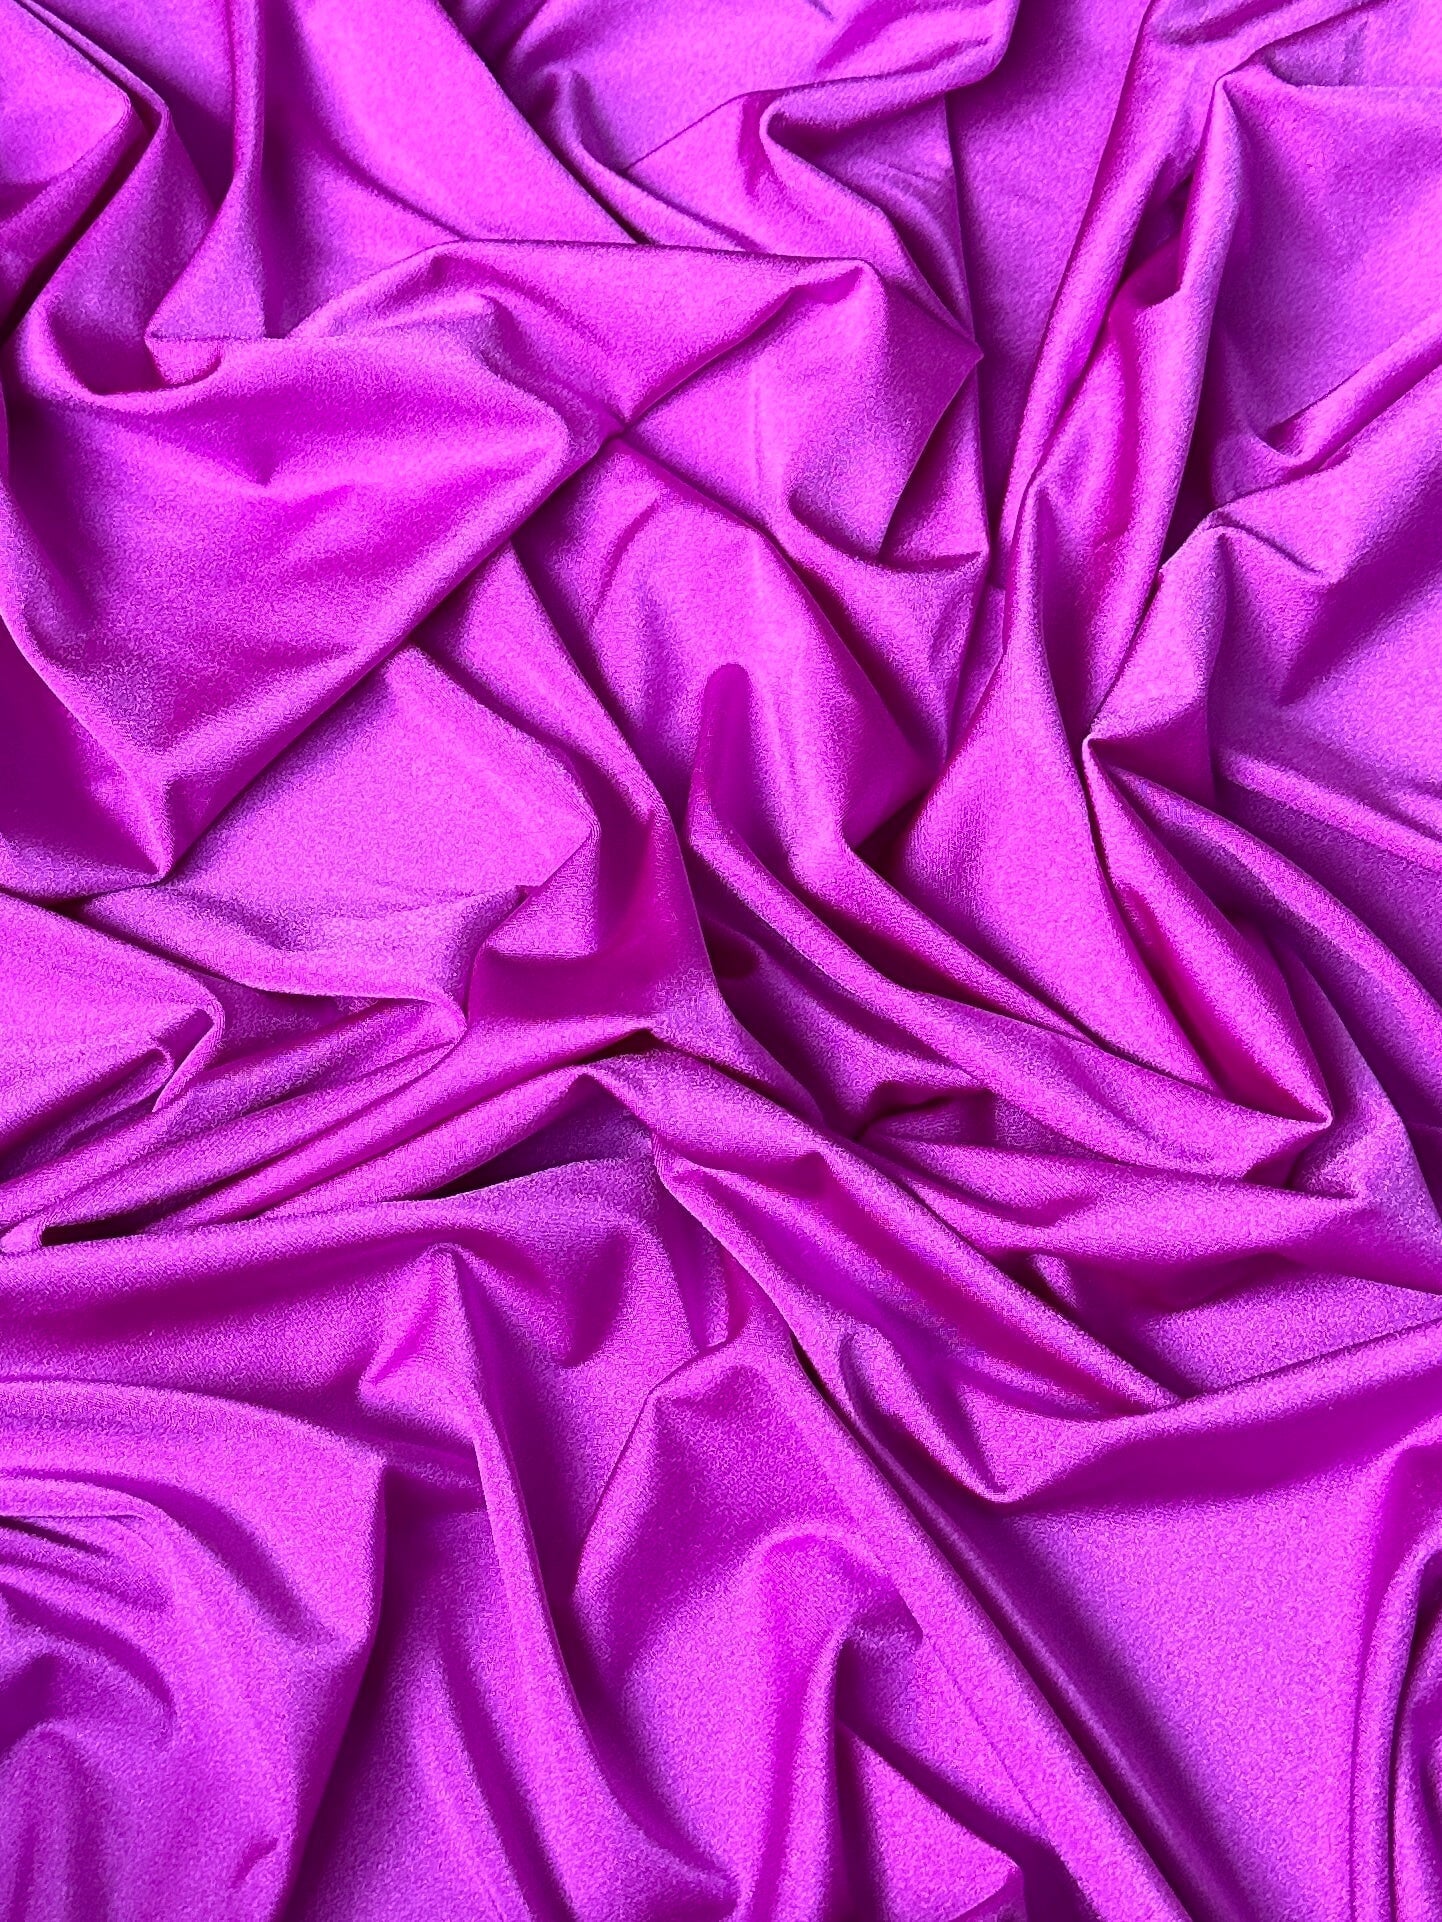 magenta Nylon Spandex, light purple nylon spandex, 4 Way Stretch nylon spandex, Tan Spandex for Dress, shiny nylon spandex for woman, shiny nylon for bride, spandex for swim wear, premium spandex, spandex on sale, low price spandex